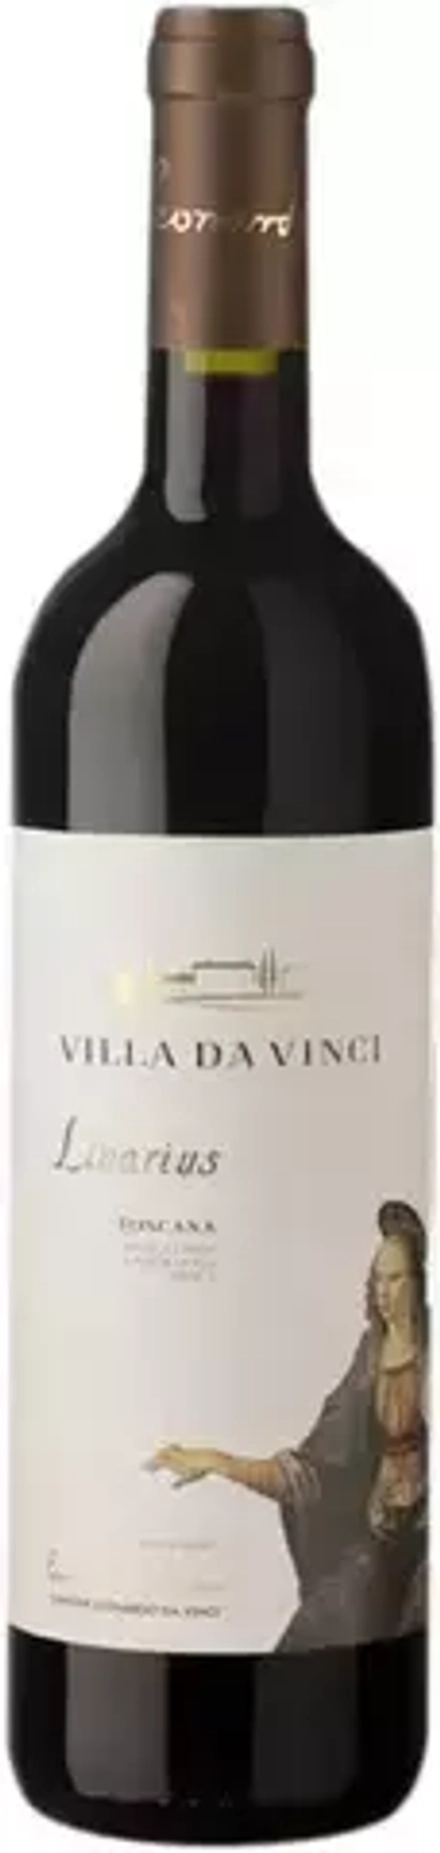 Вино Villa da Vinci Linarius Toscana IGT, 0,75 л.